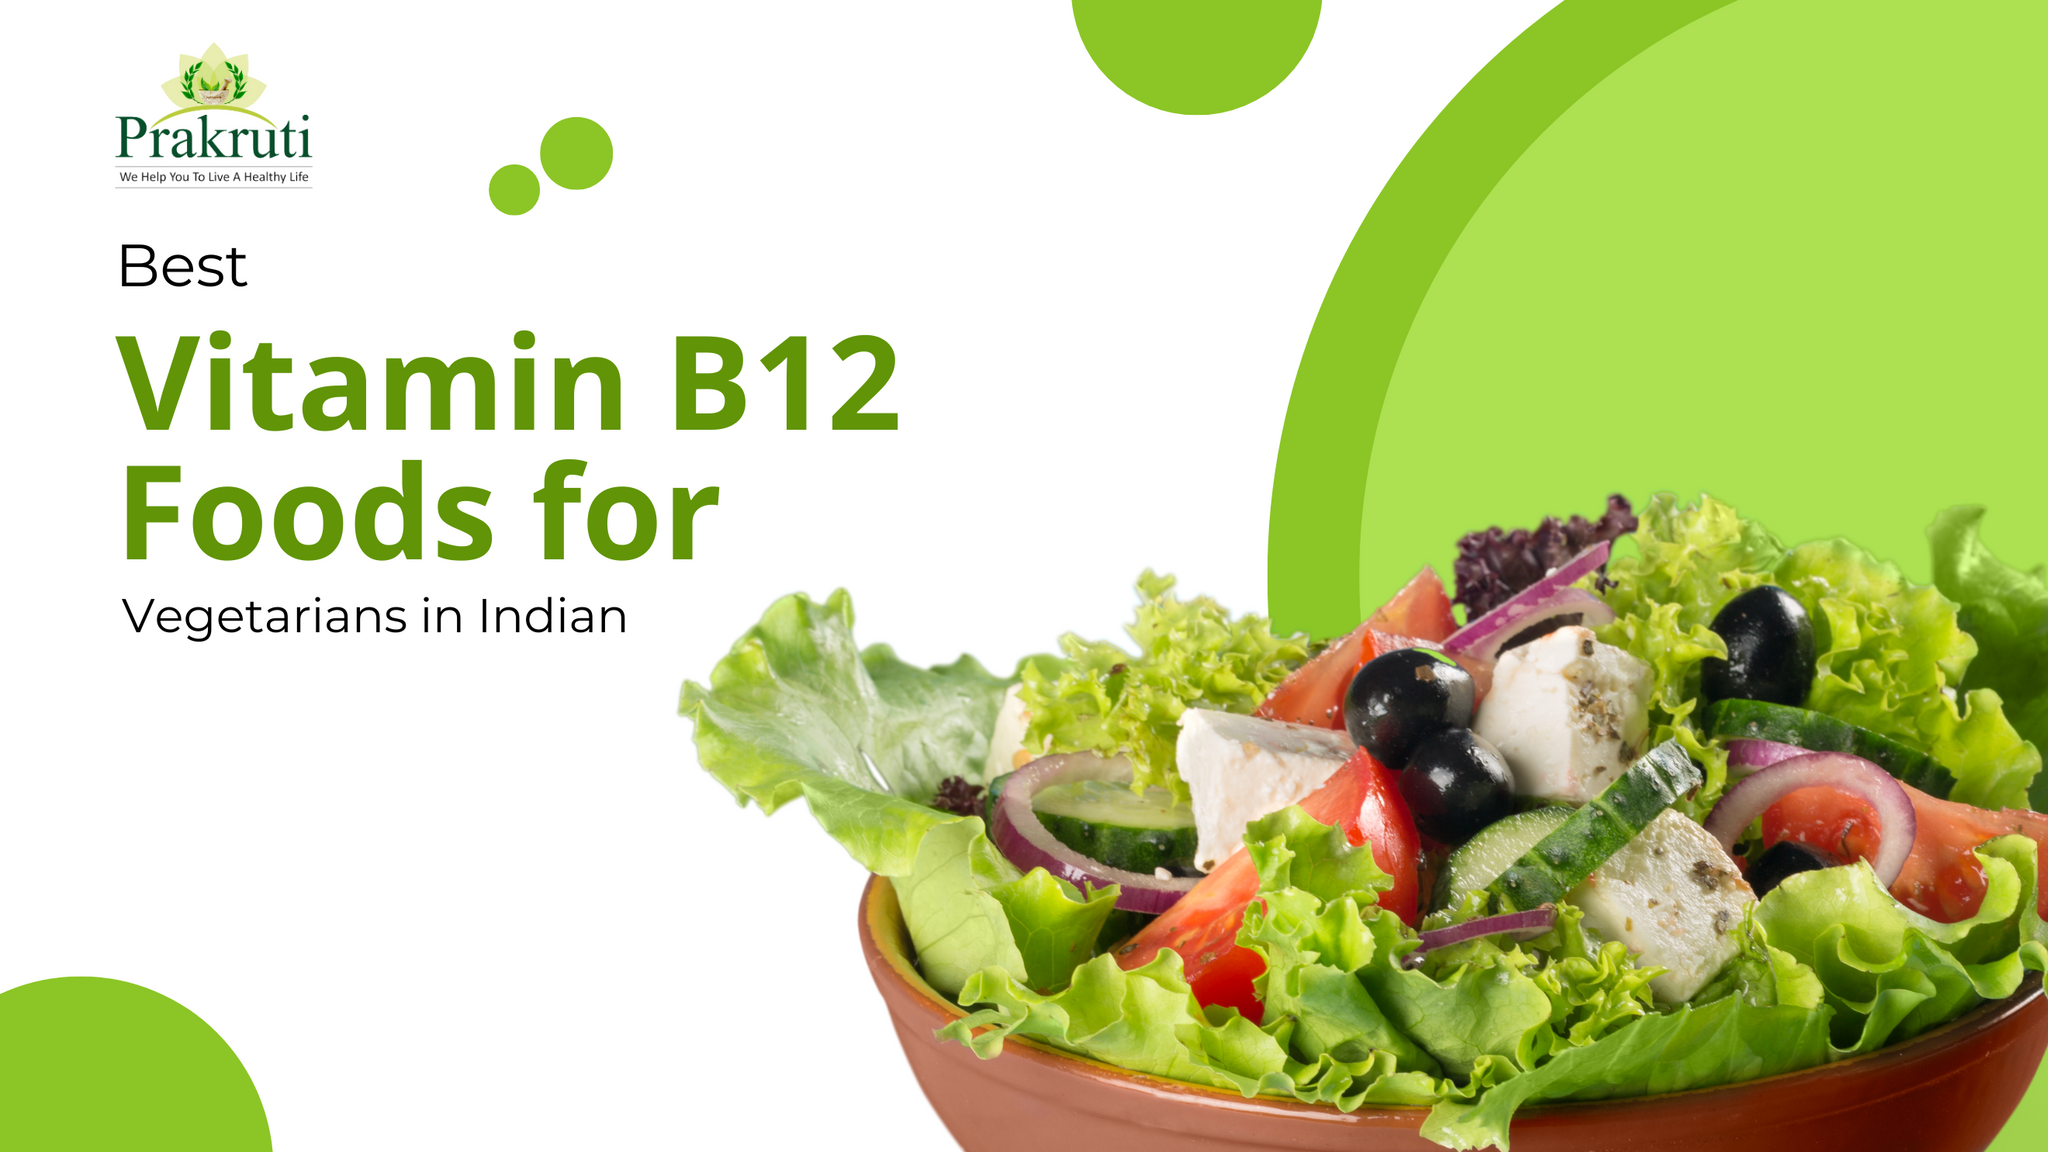 Best Vitamin B12 Foods for Vegetarians in Indian